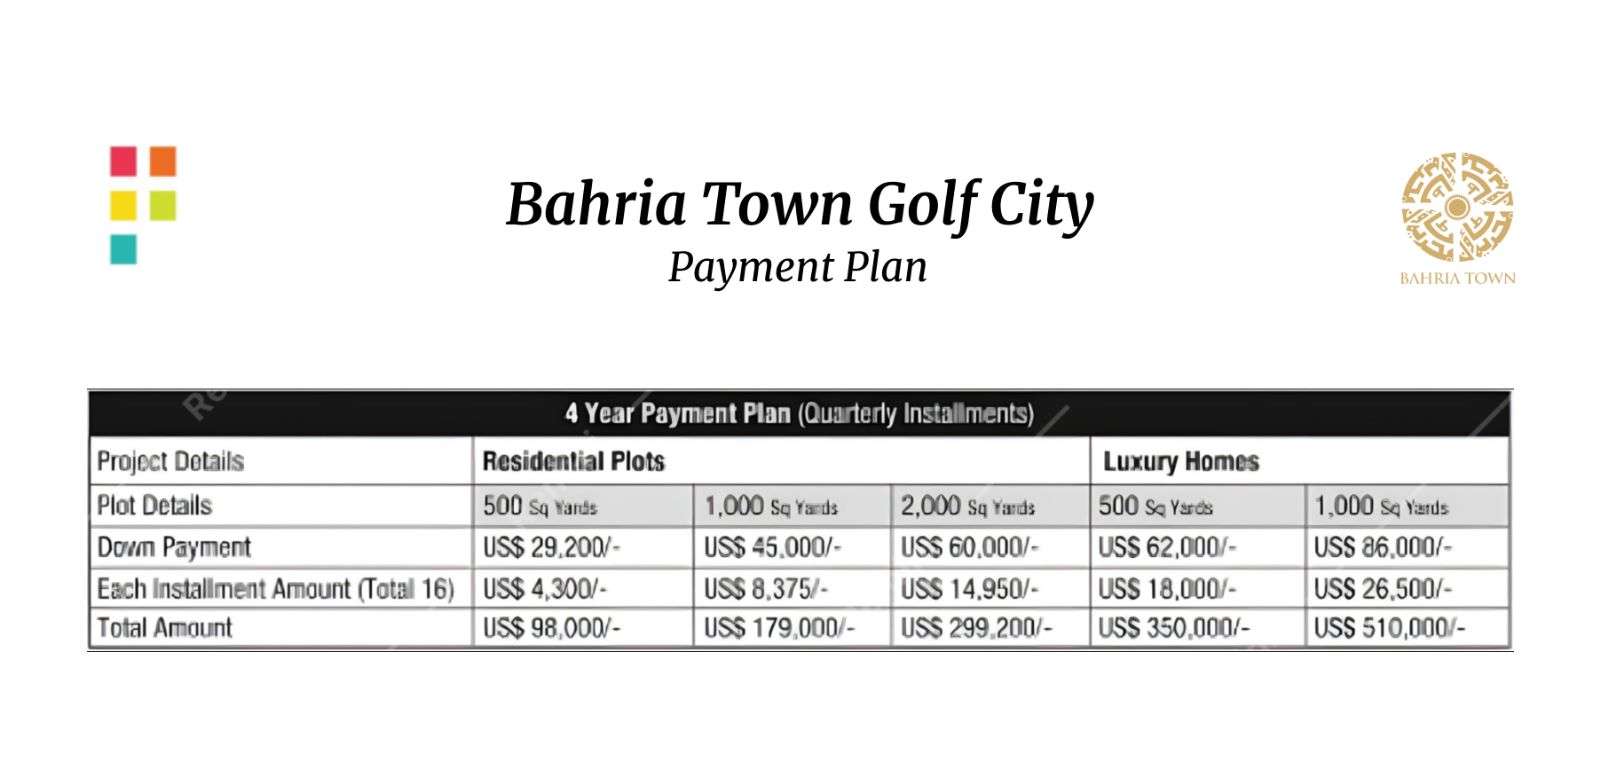 Payment Plan of Bahria Golf City at Bahria Town Karachi